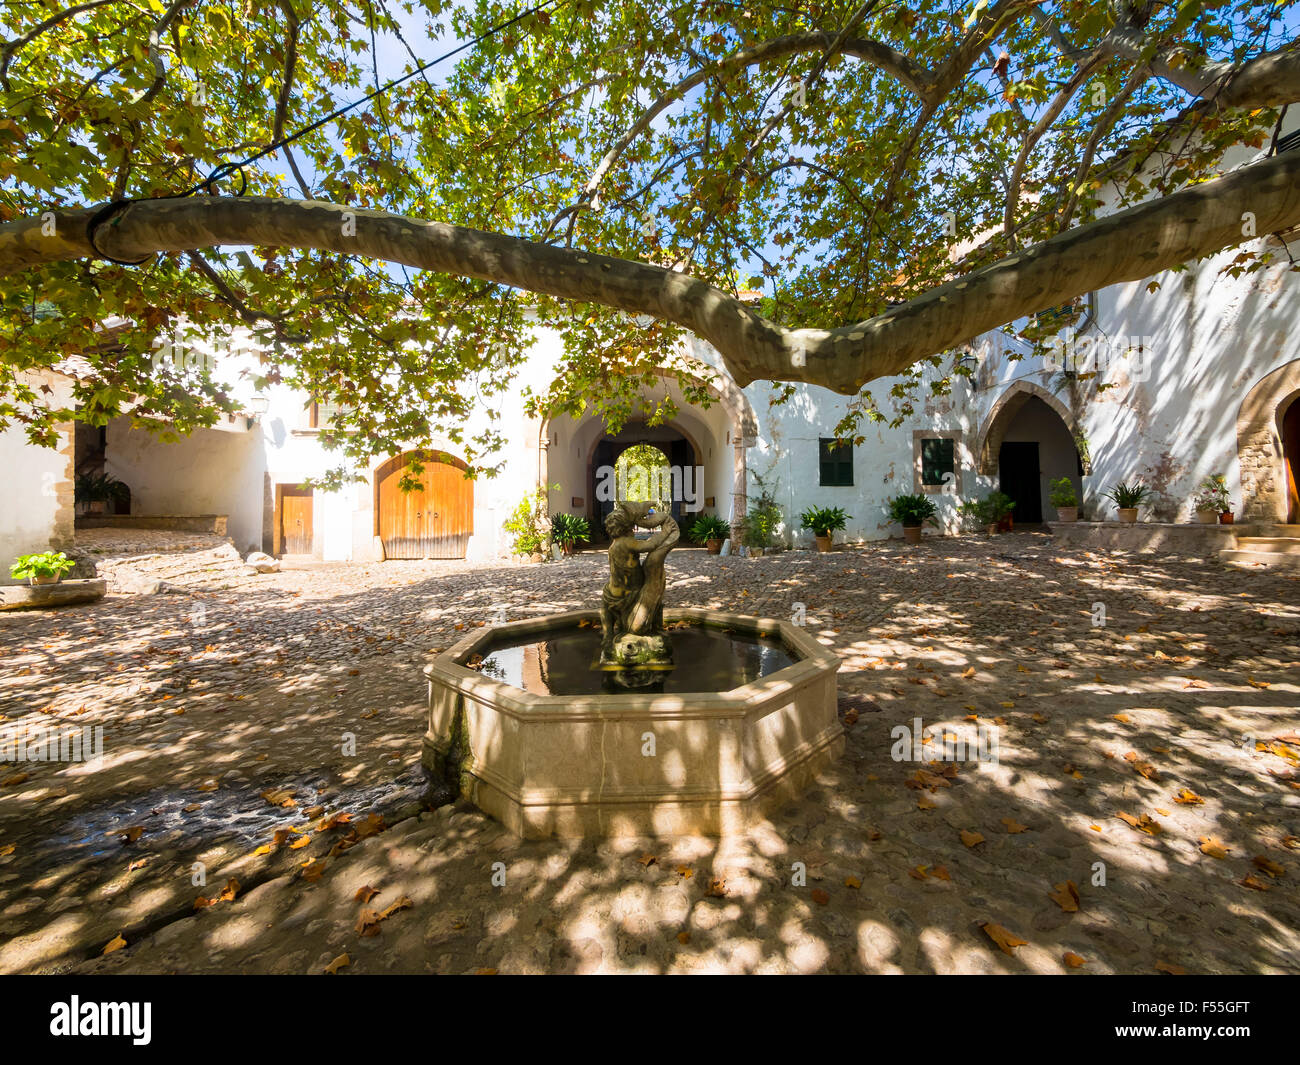 Spain, Mallorca, Jardines de Alfabia garden, Mansion, courtyard with fountain Stock Photo